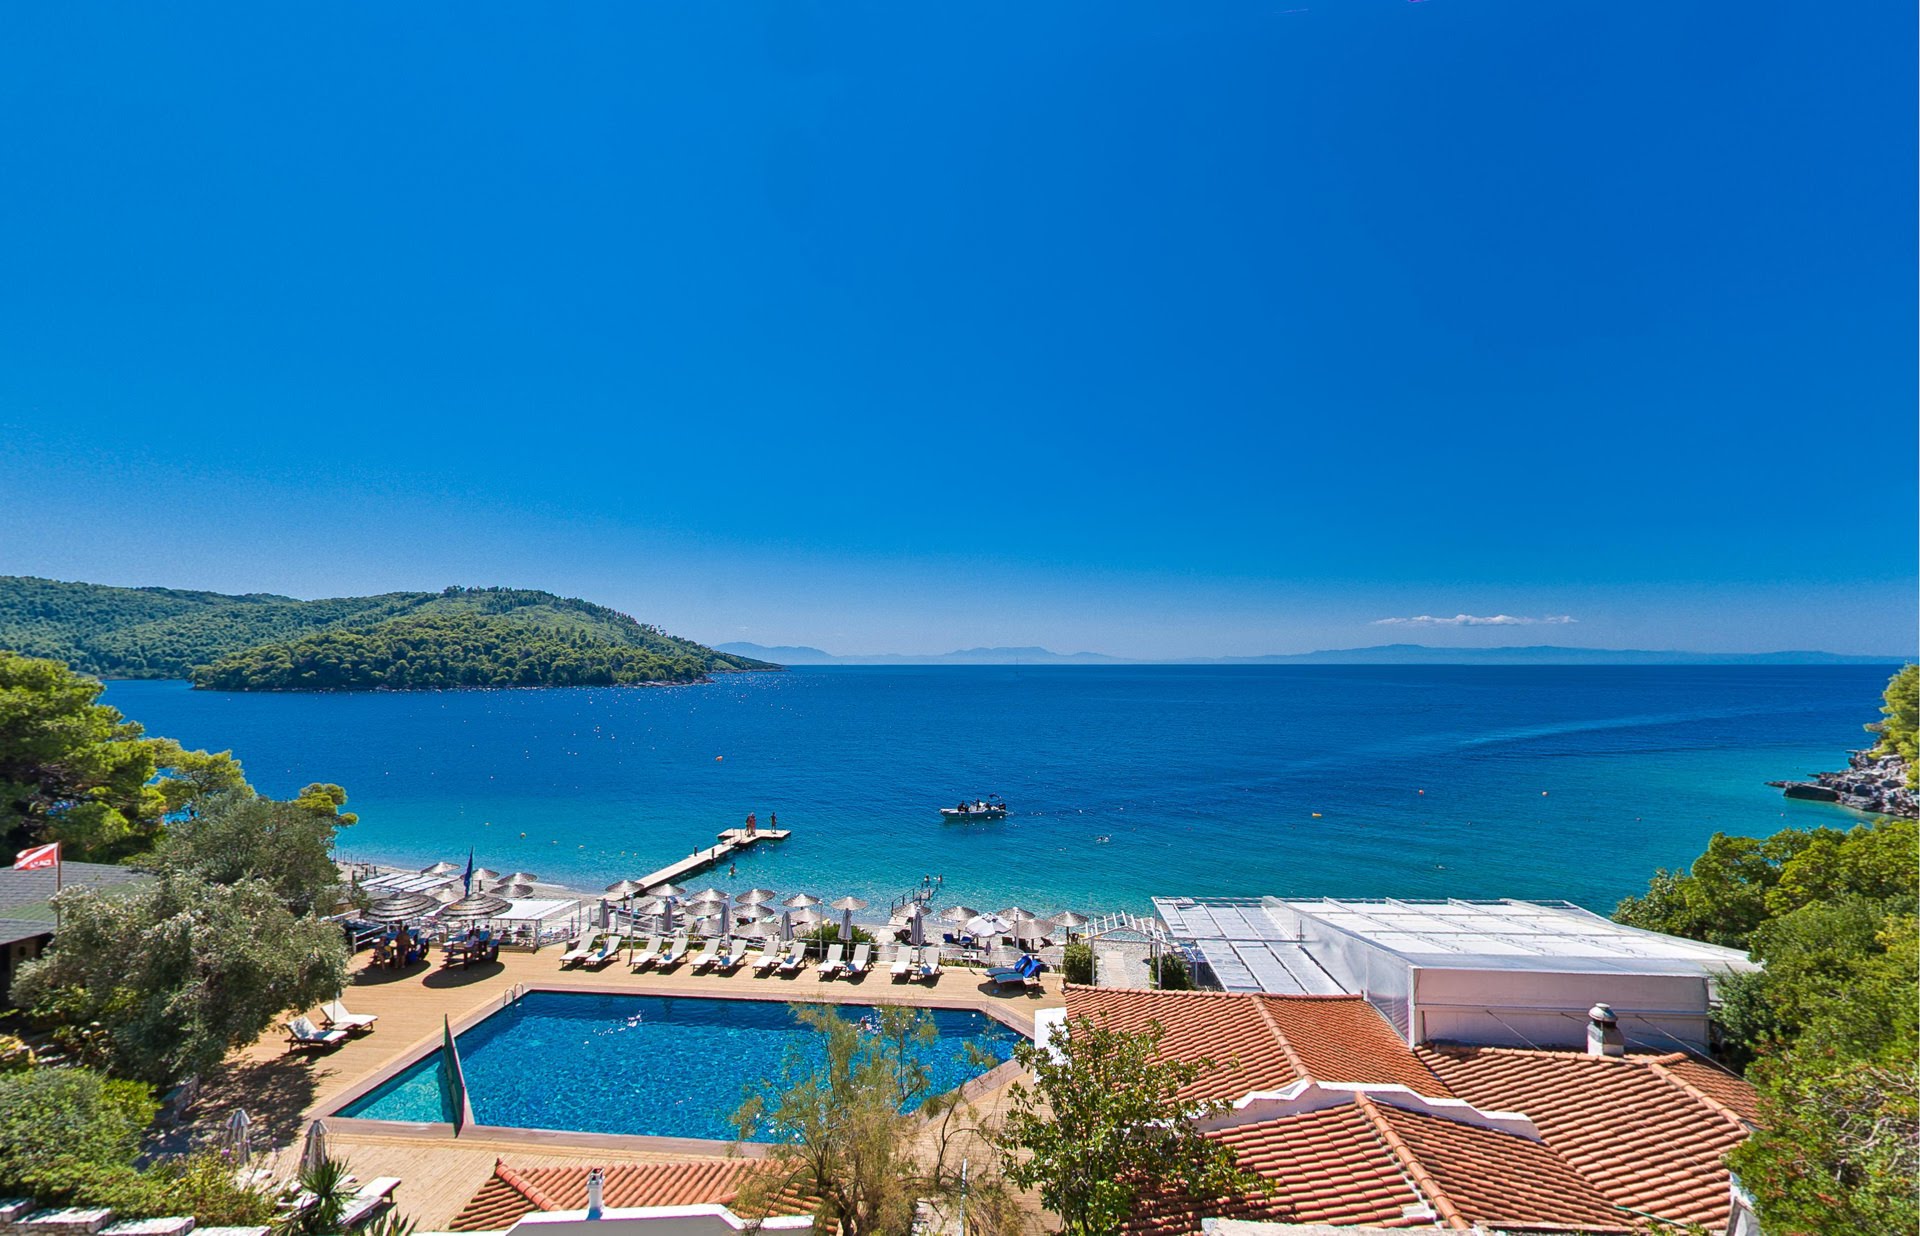 Skopelos Hotels Skopelos Hotels, hotels on Skopelos island, Adrina ...